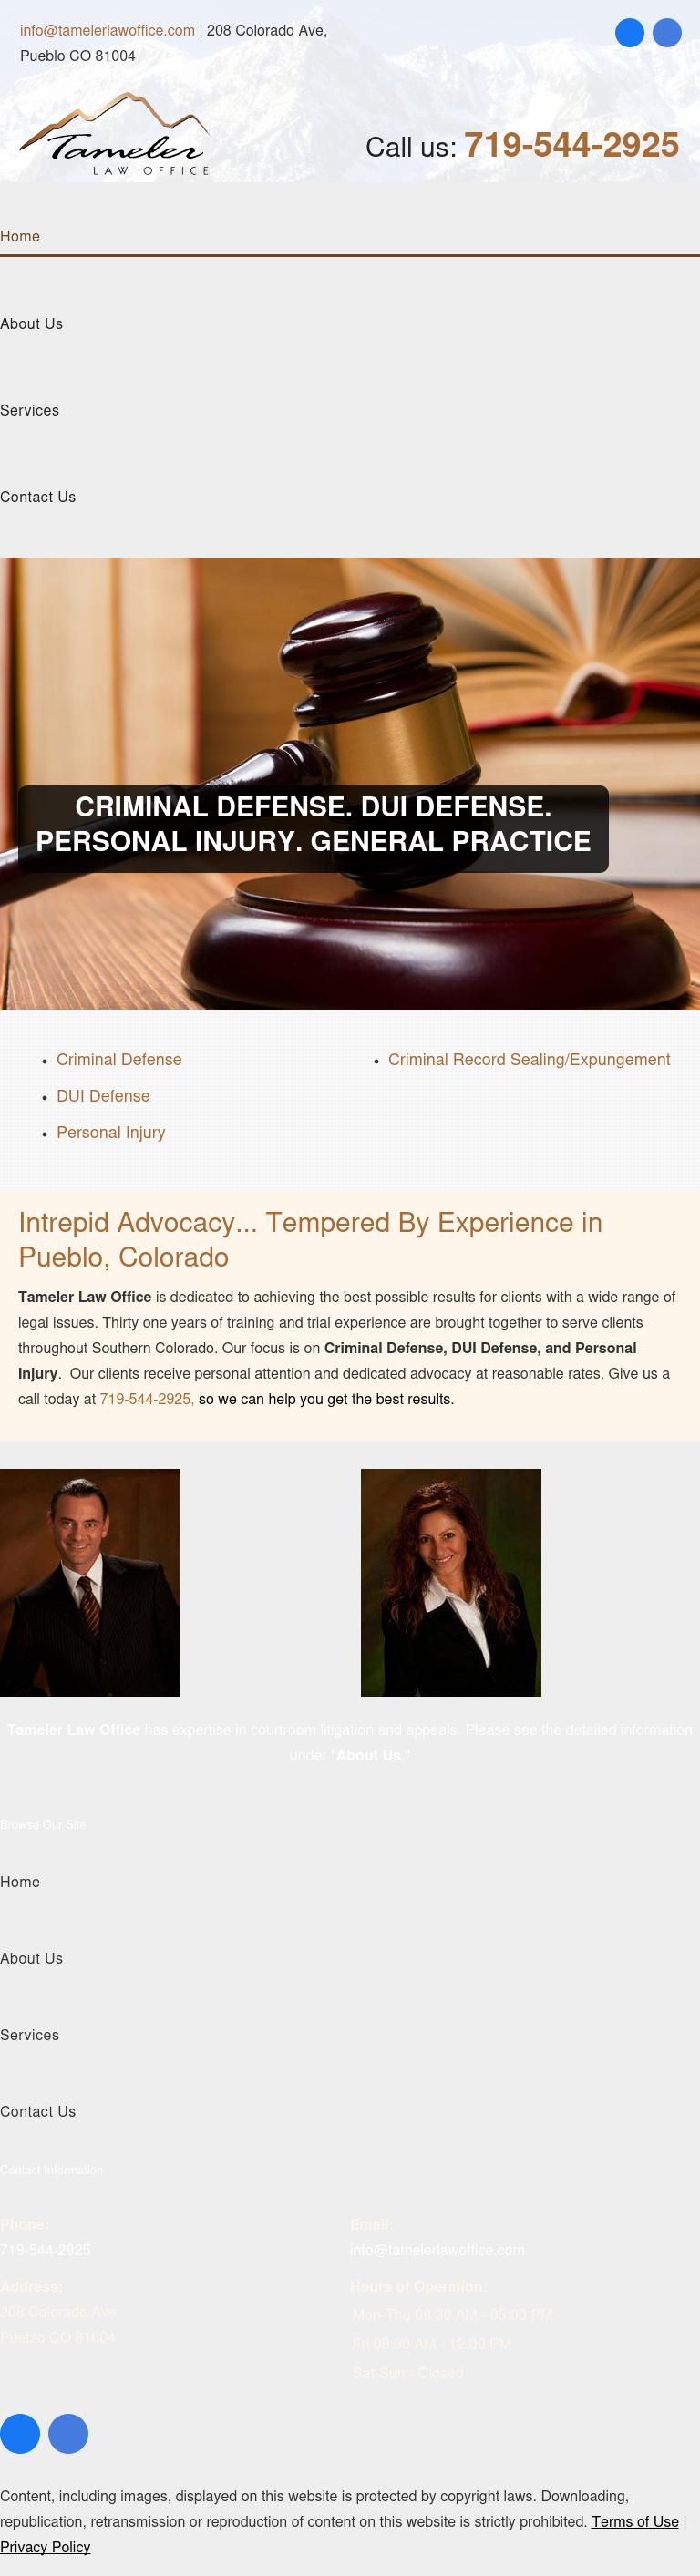 Tameler Law Office - Pueblo CO Lawyers